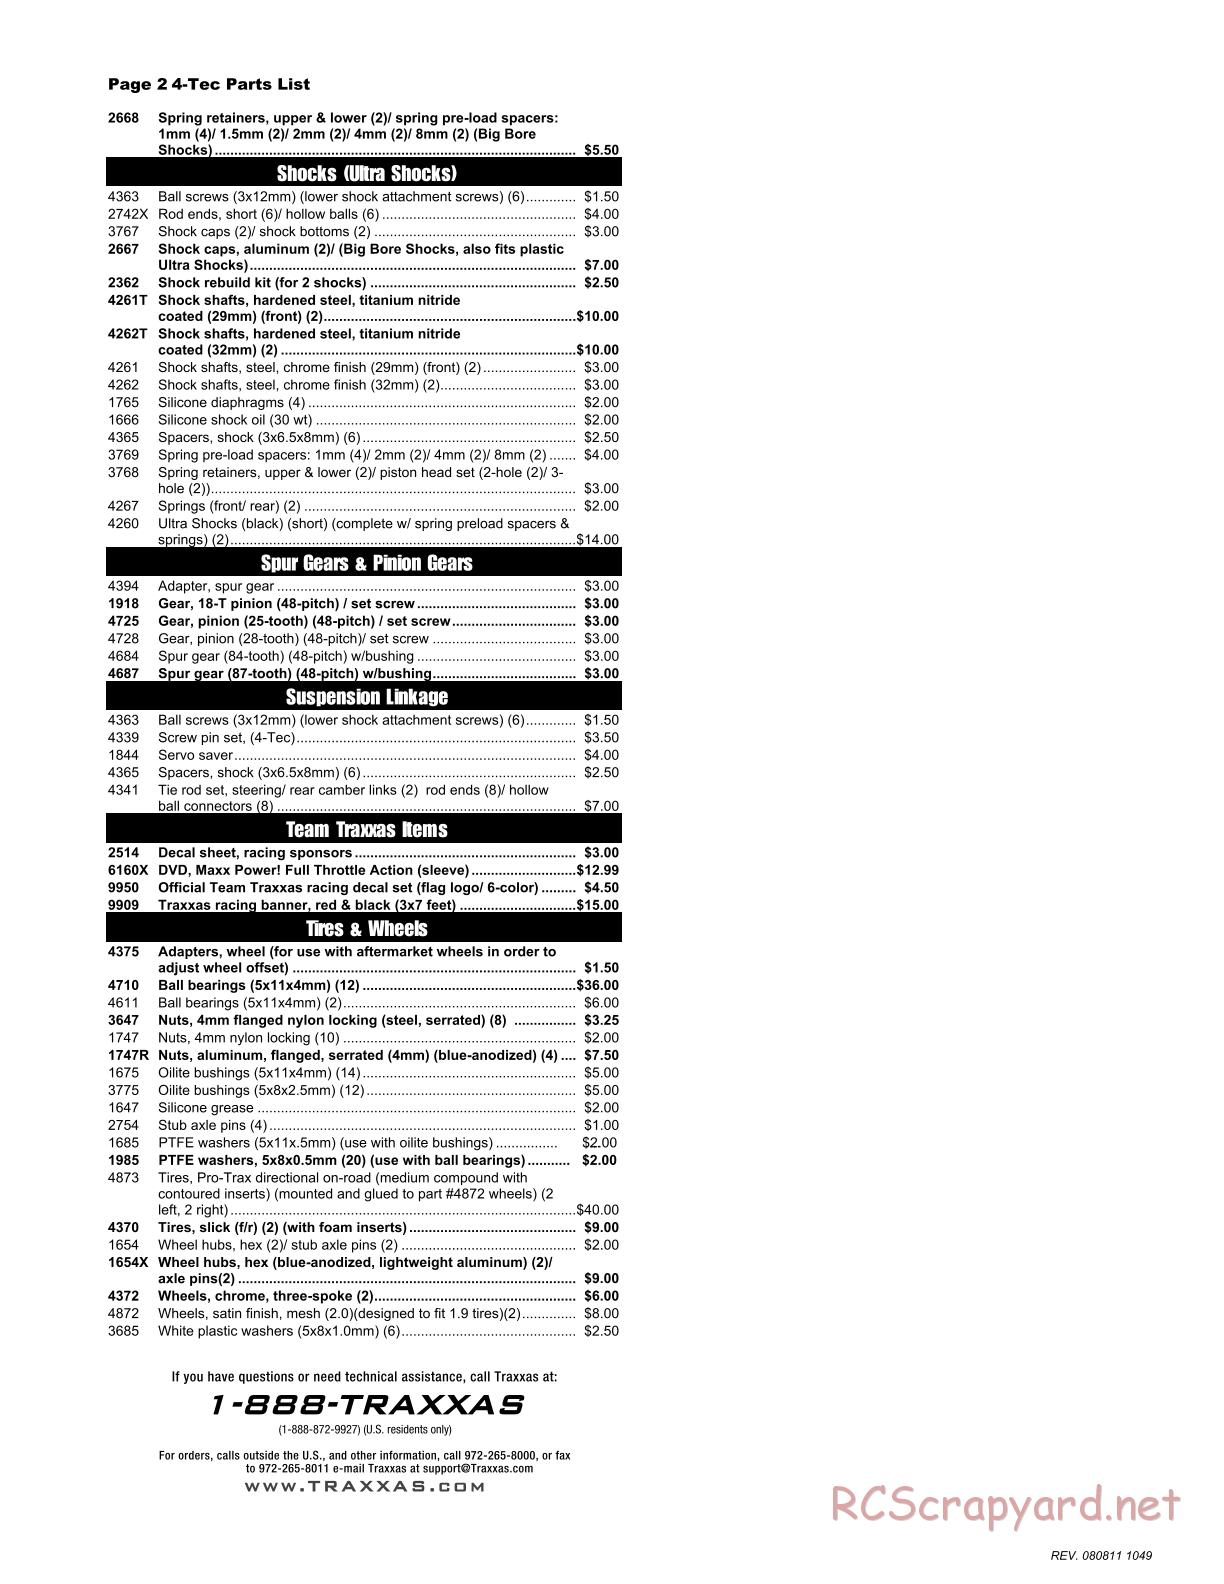 Traxxas - 4-Tec XL-1 - Parts List - Page 2